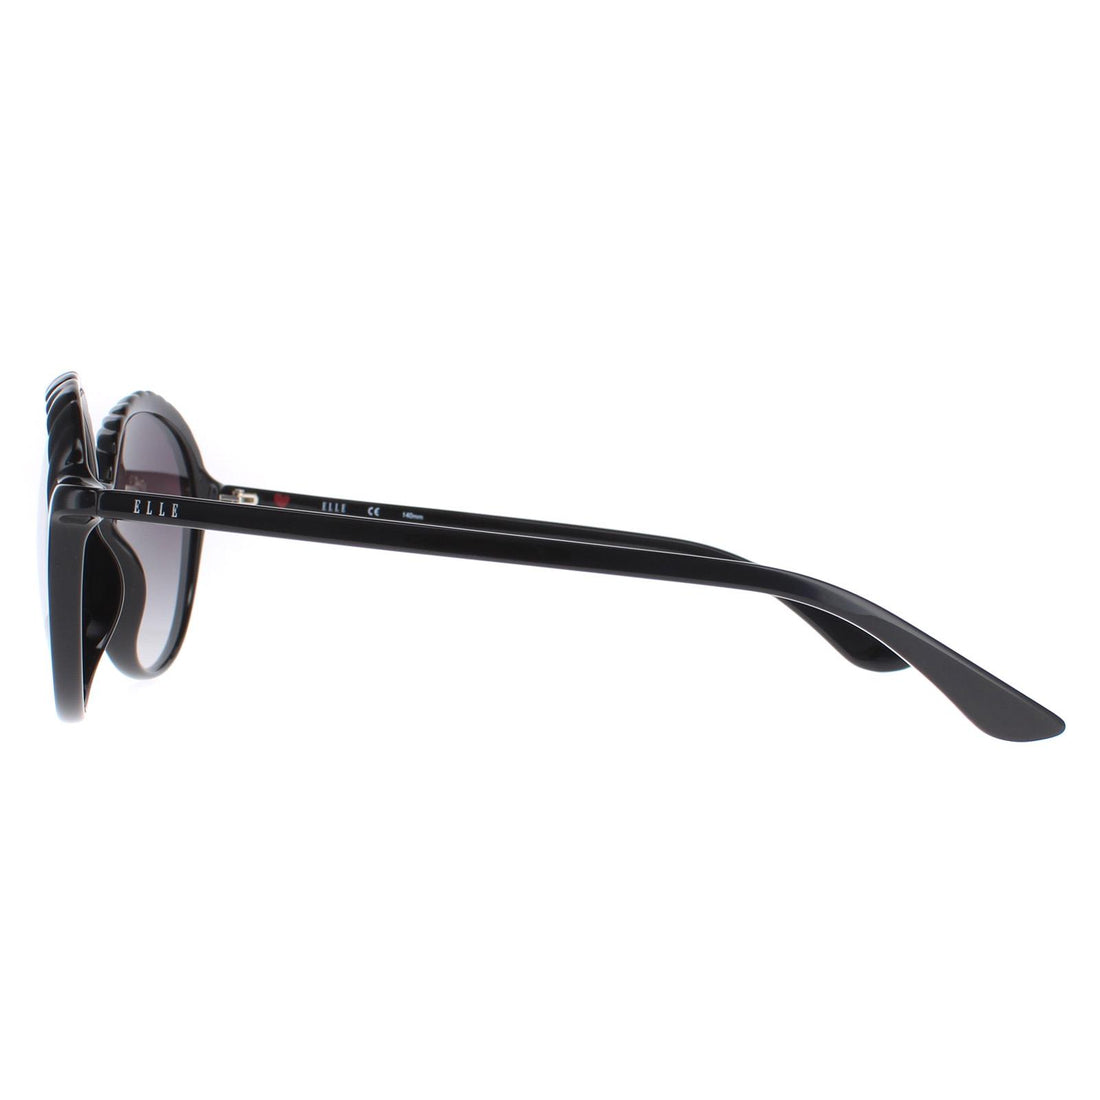 Elle Sunglasses 14919 BK Black Grey Gradient